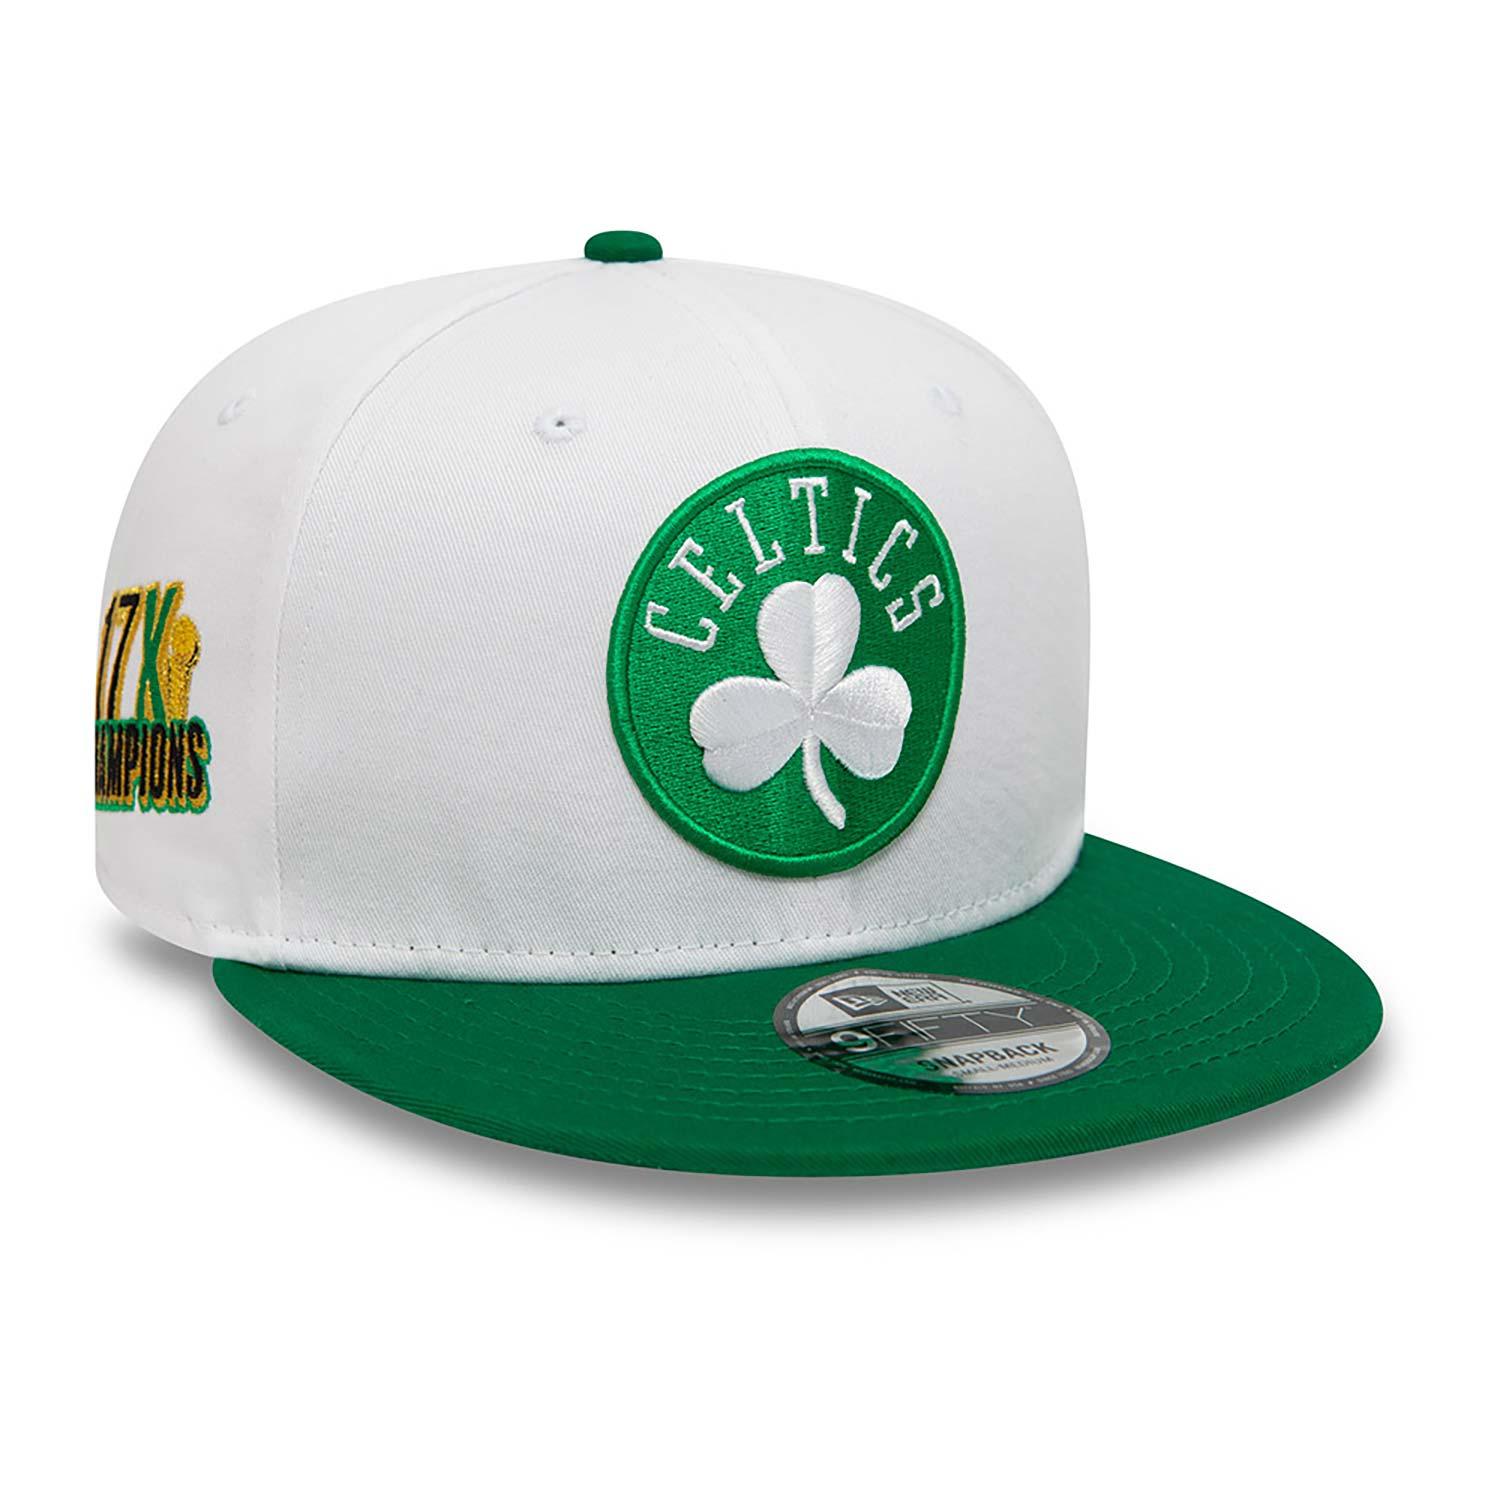 New Era - Feature x New Era 9FIFTY Snapback - Boston Celtics | Feature